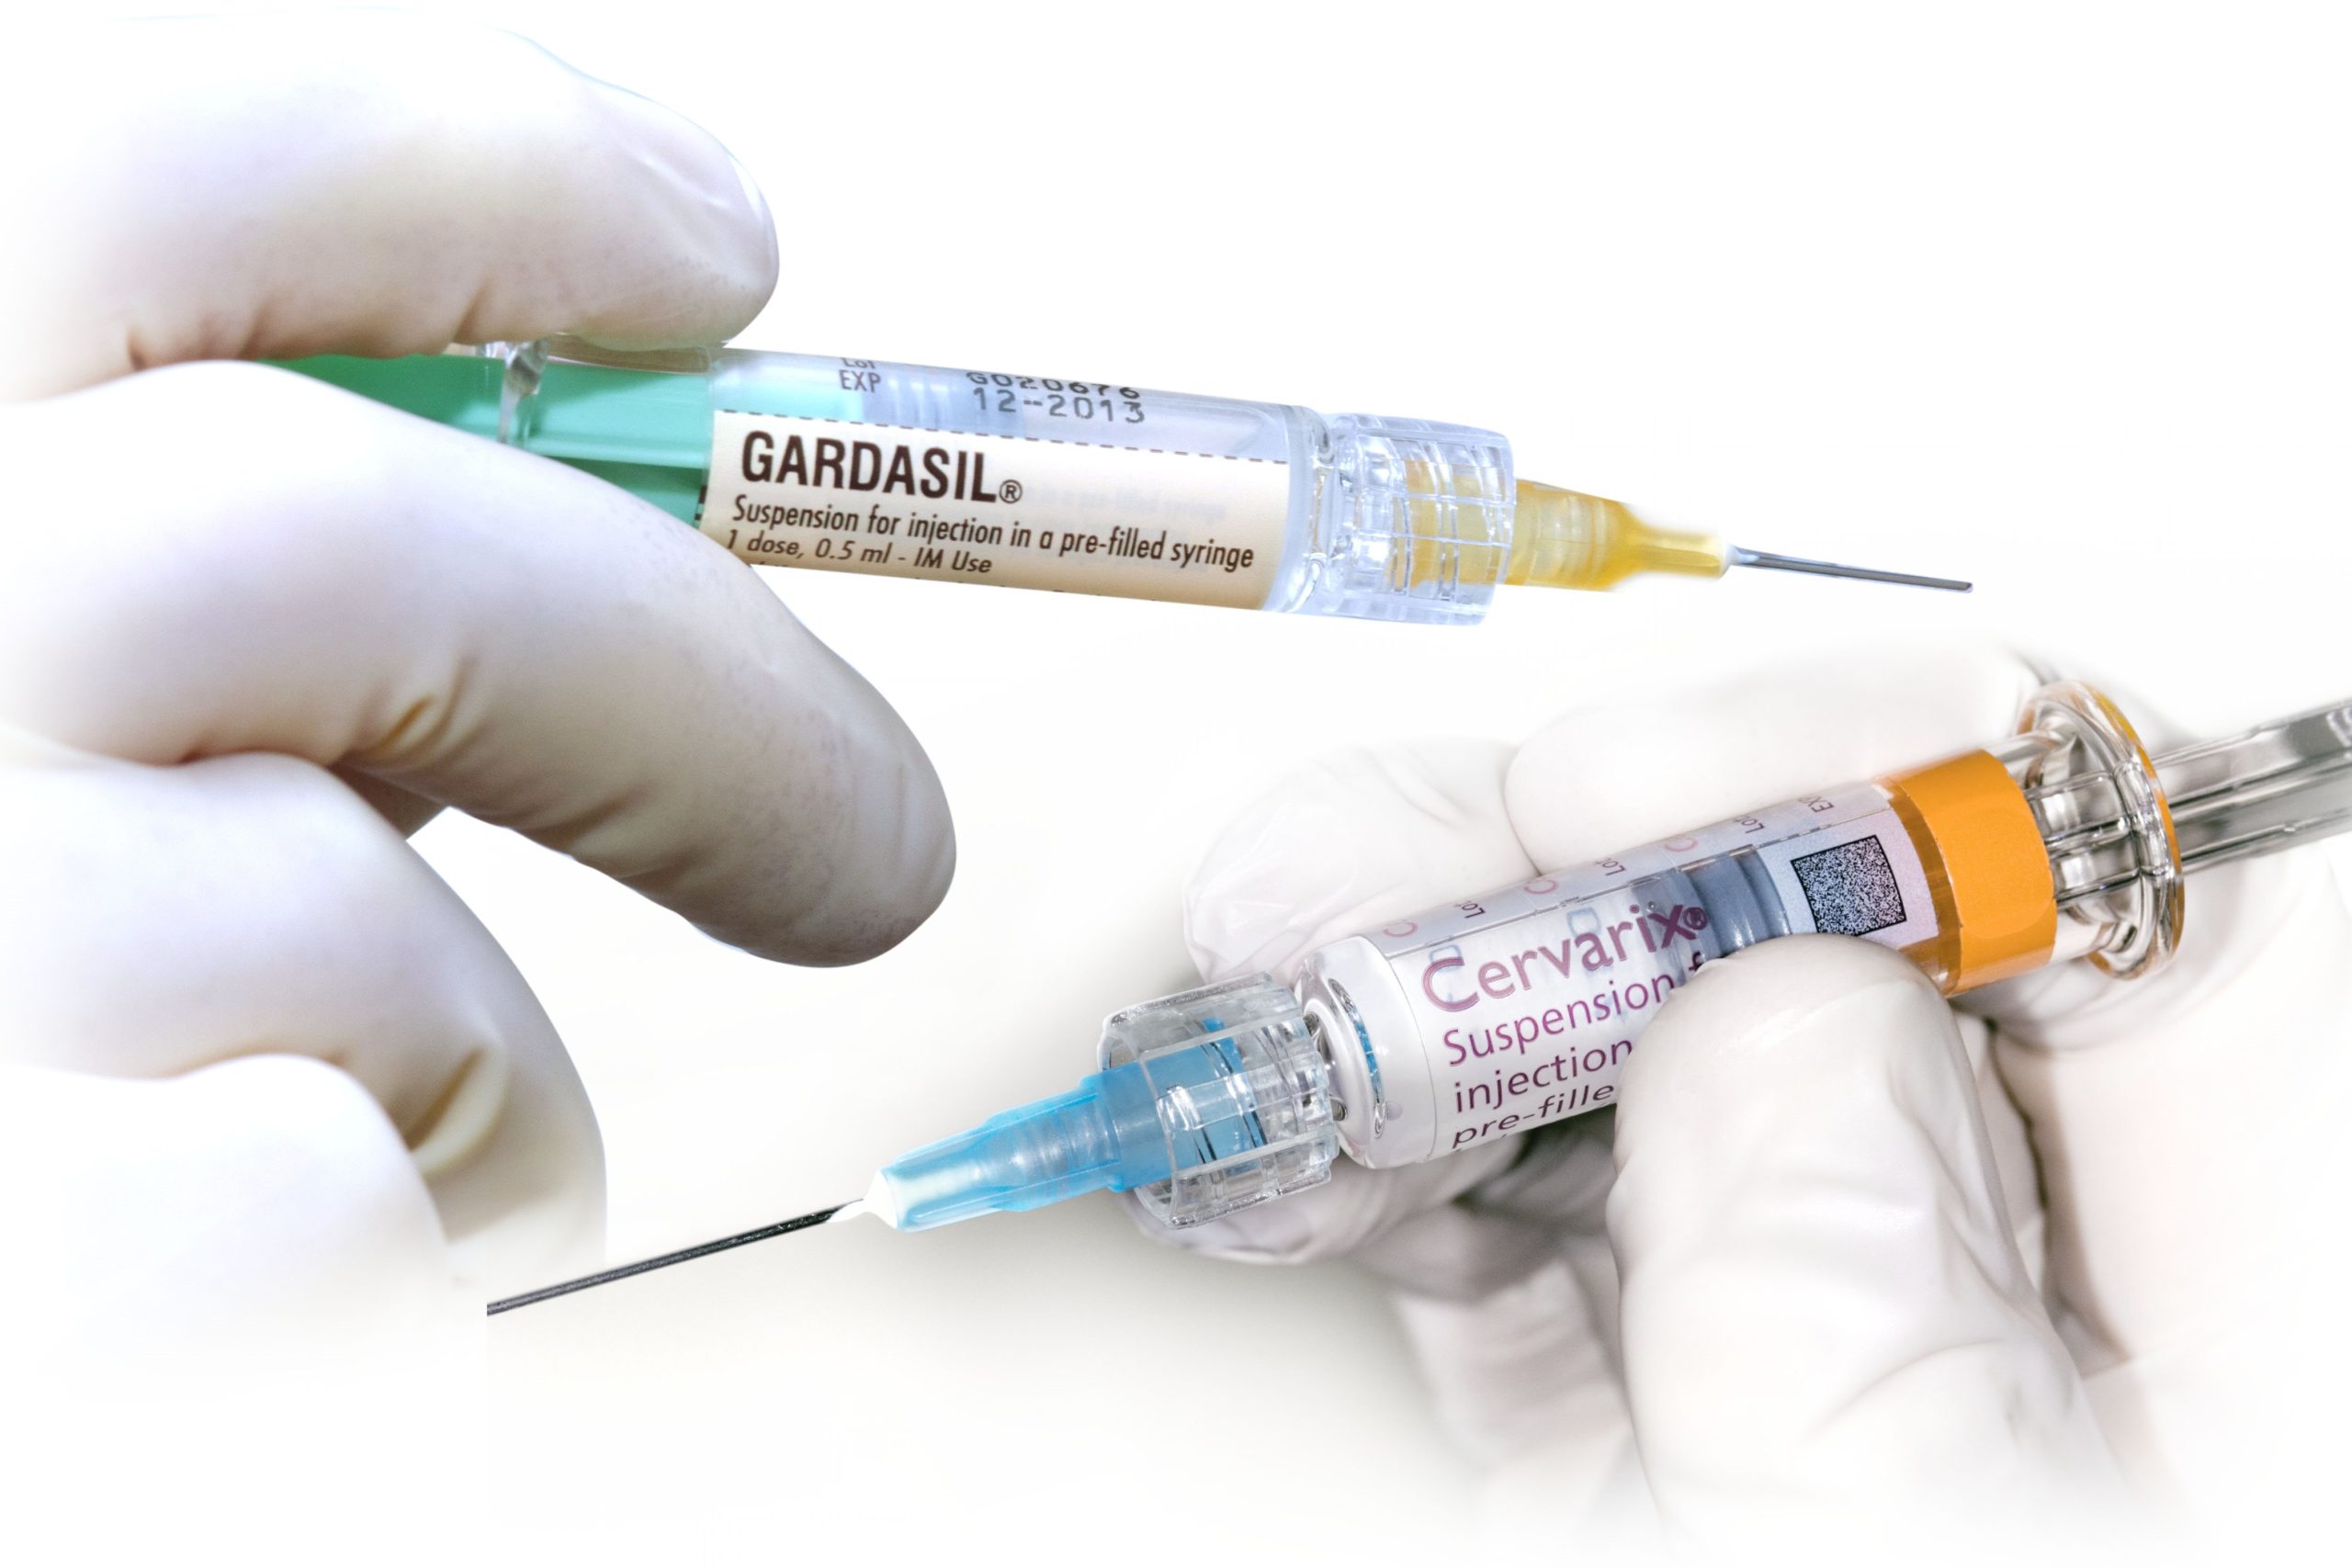 human papillomavirus vaccine gardasil)